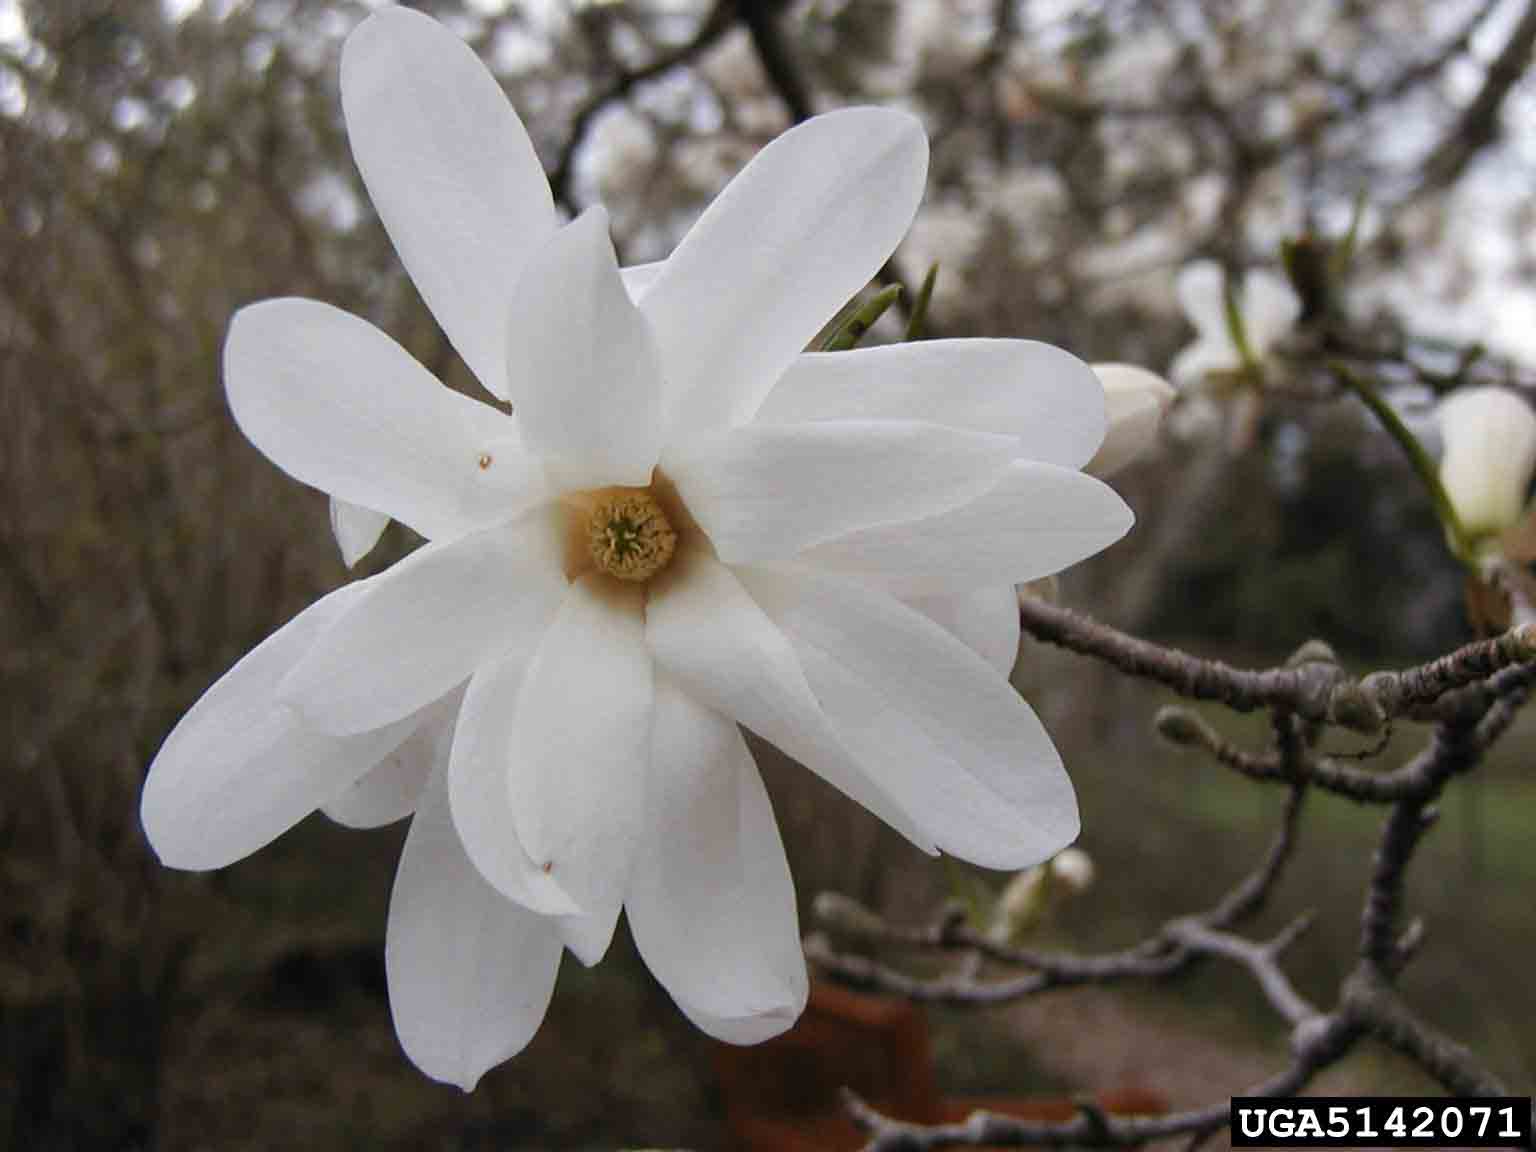 Star magnolia flower, 3"-4" in diameter